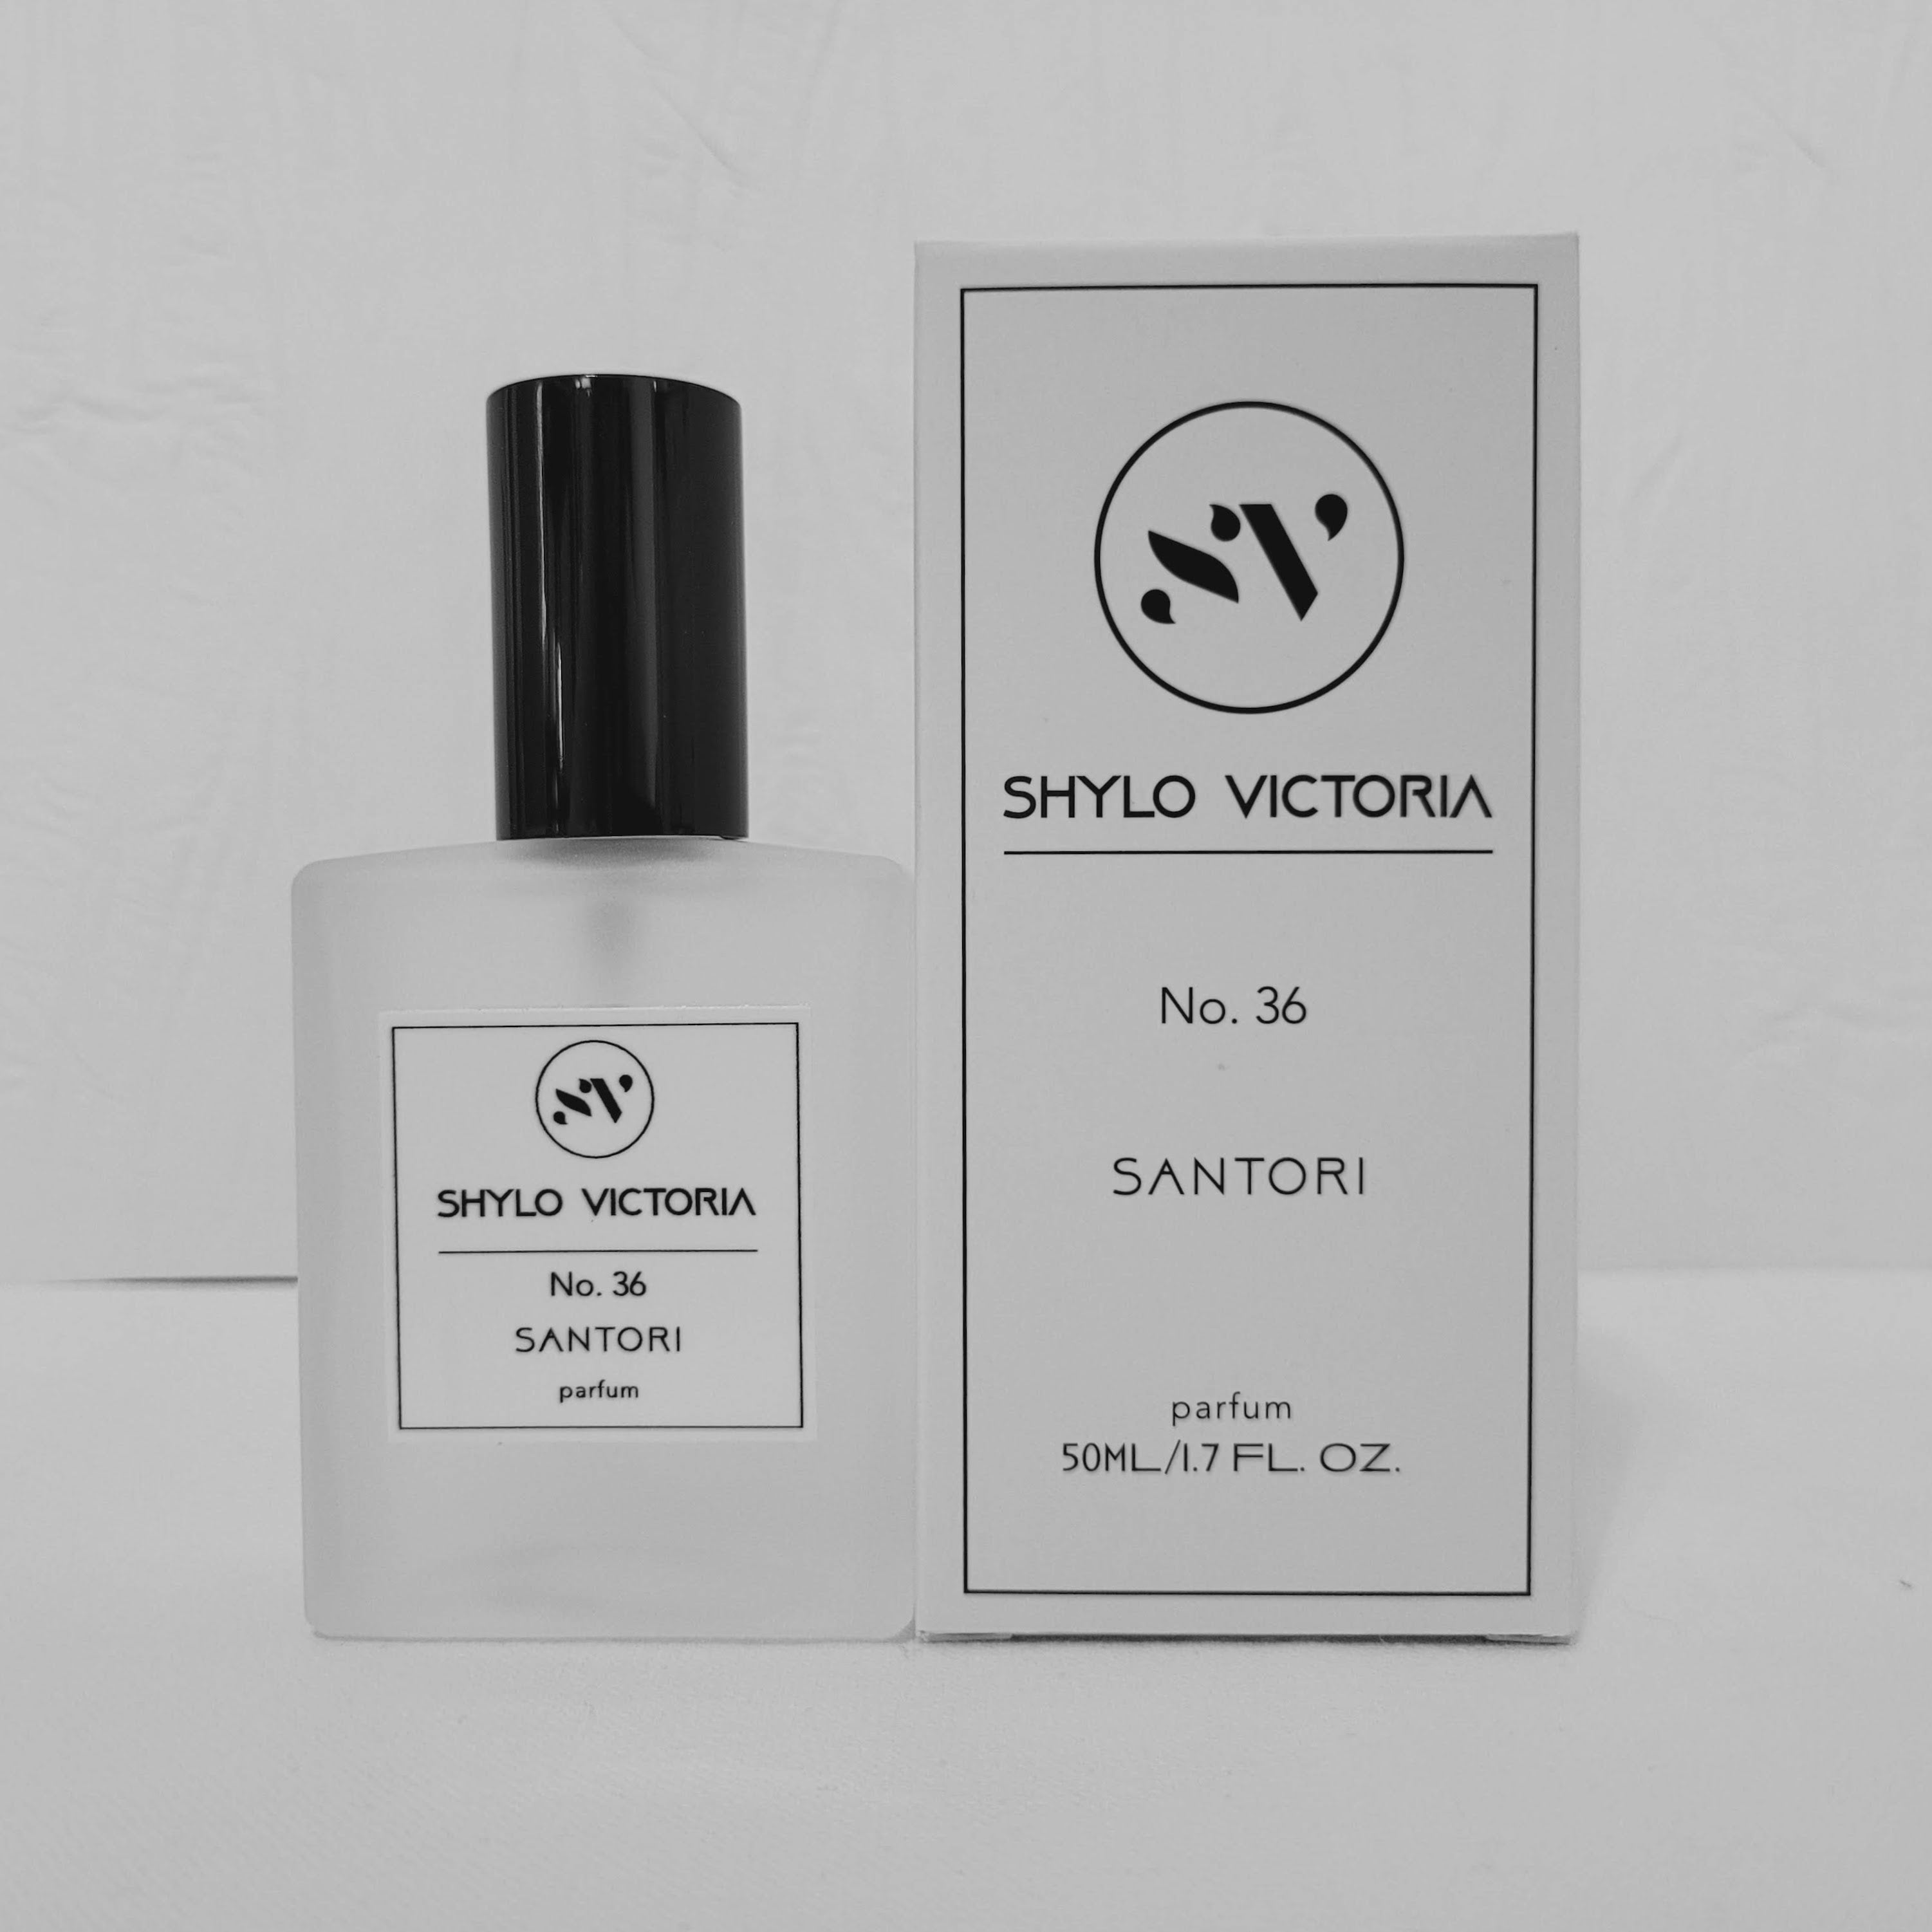 Shylo Victoria #36 Santori Perfume